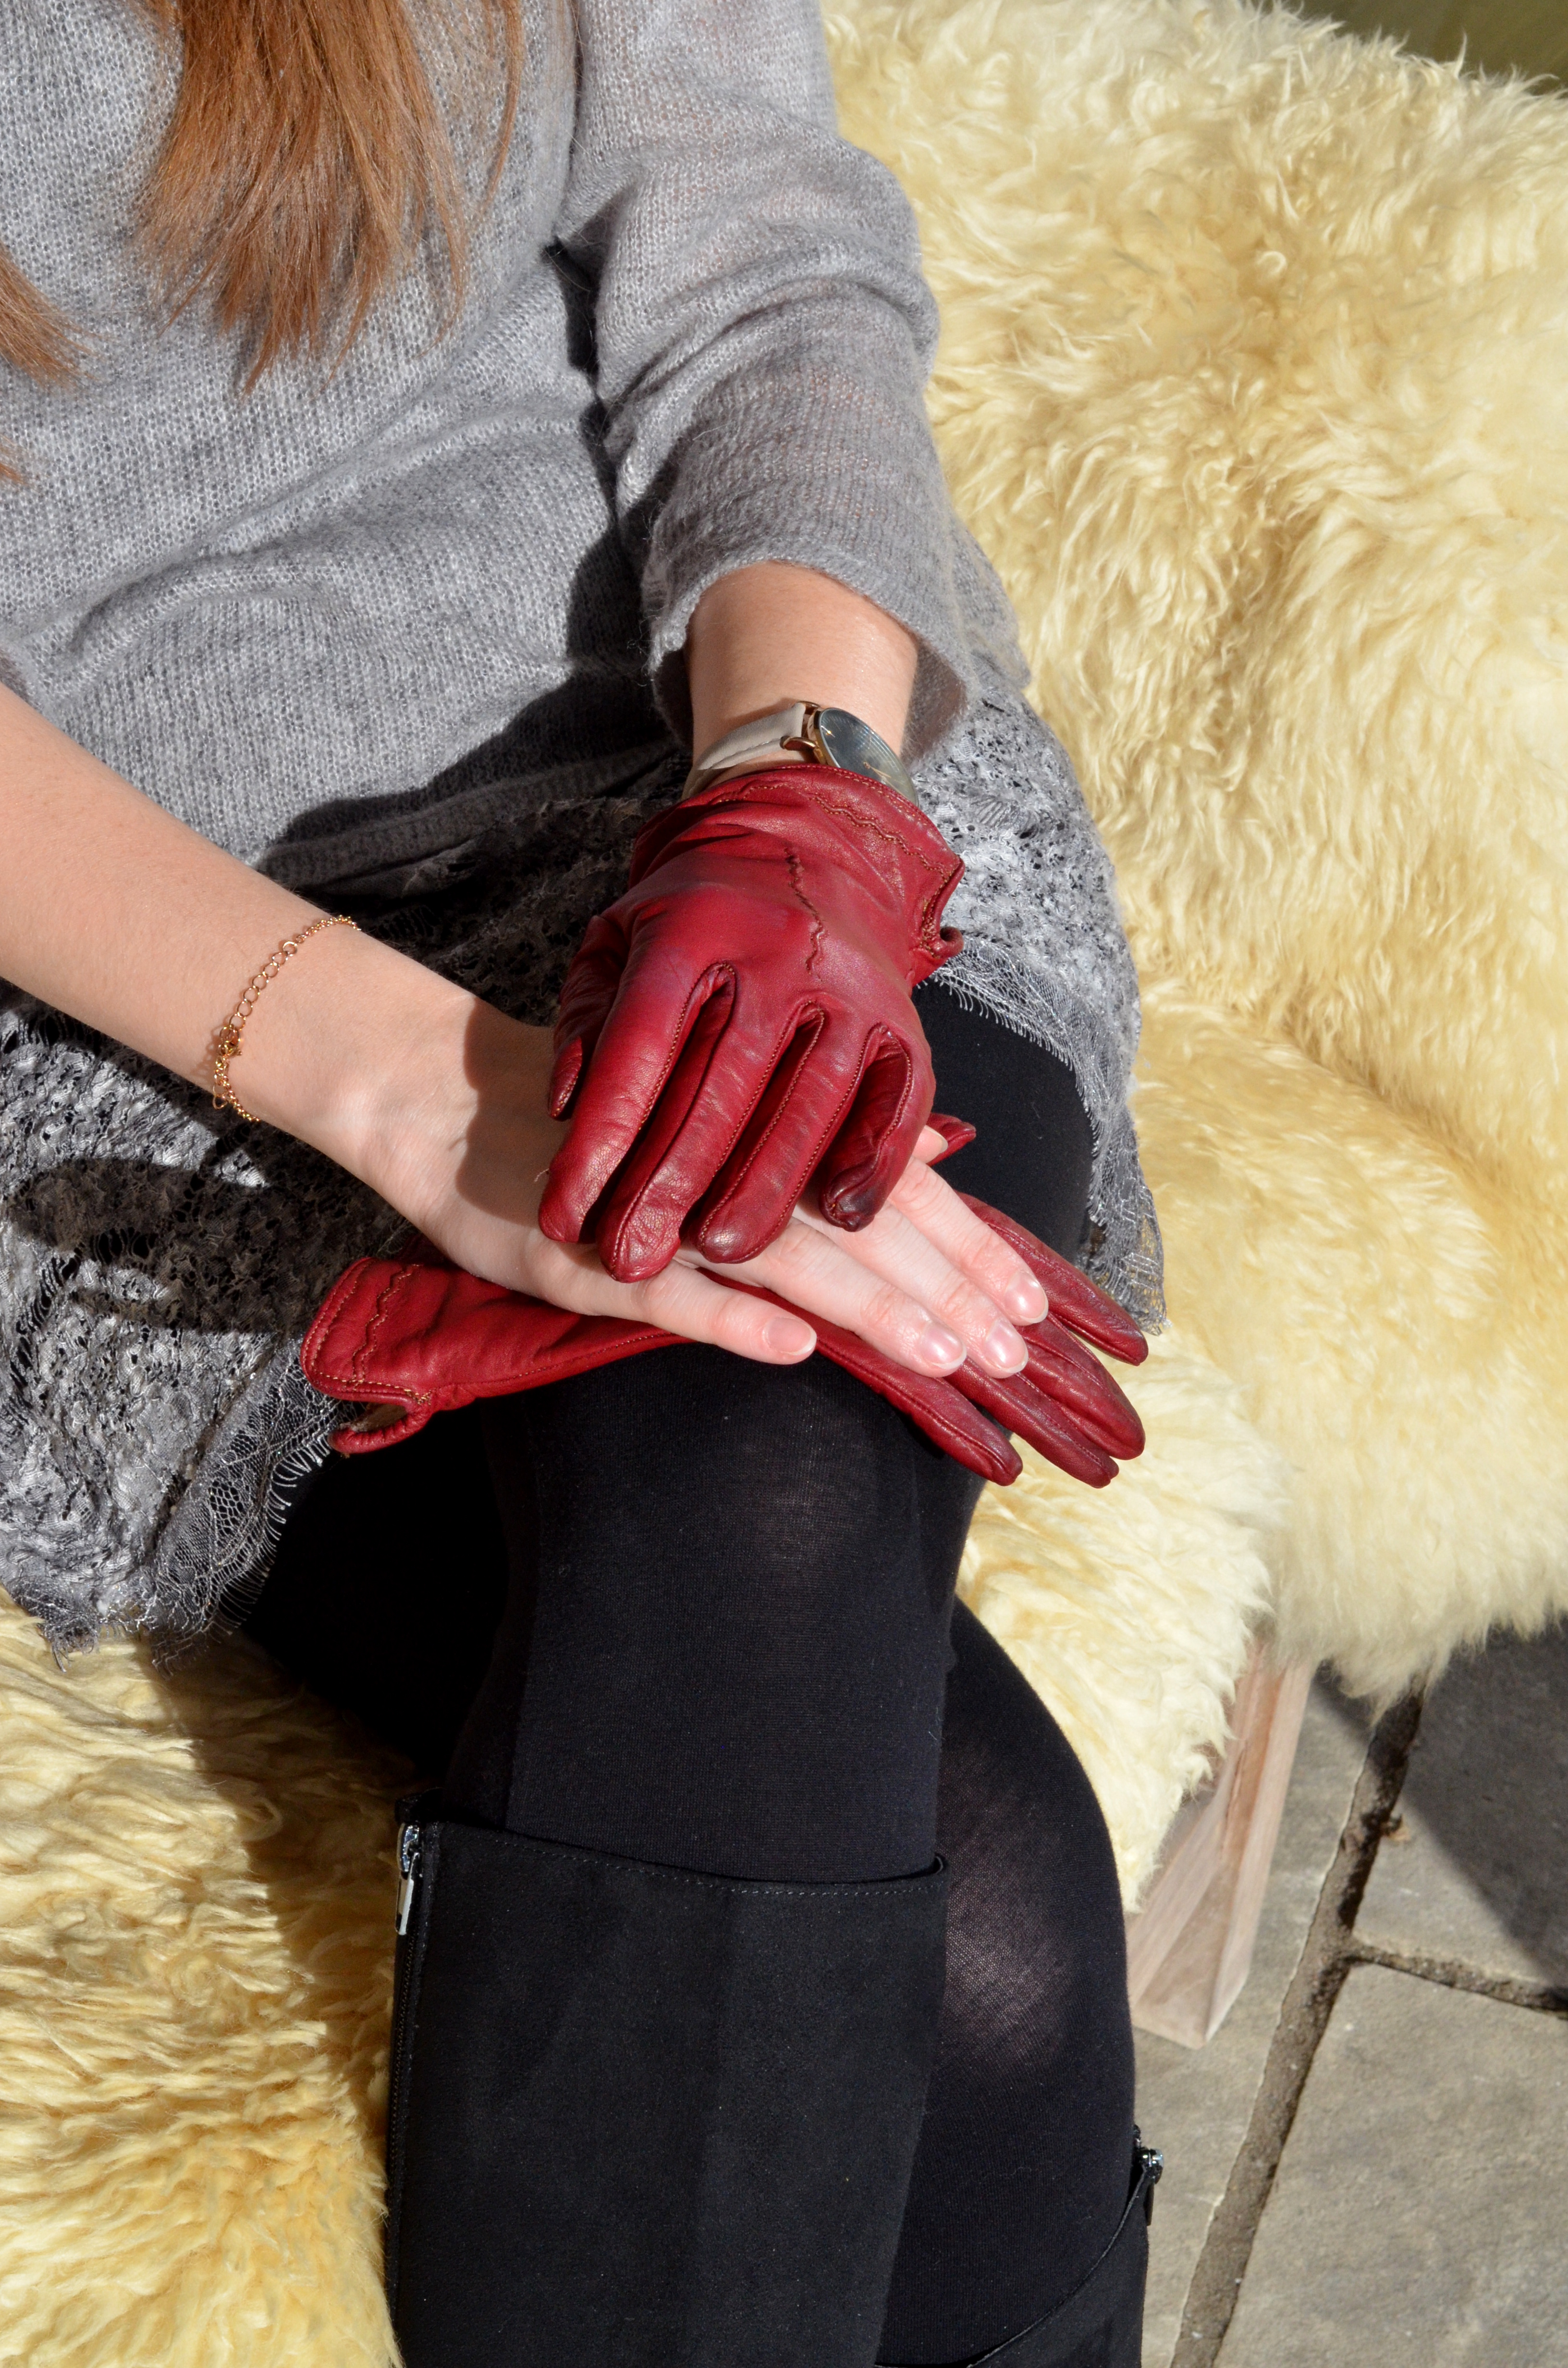 Winteroutfit - Strickkleid & rote Lederhandschuhe